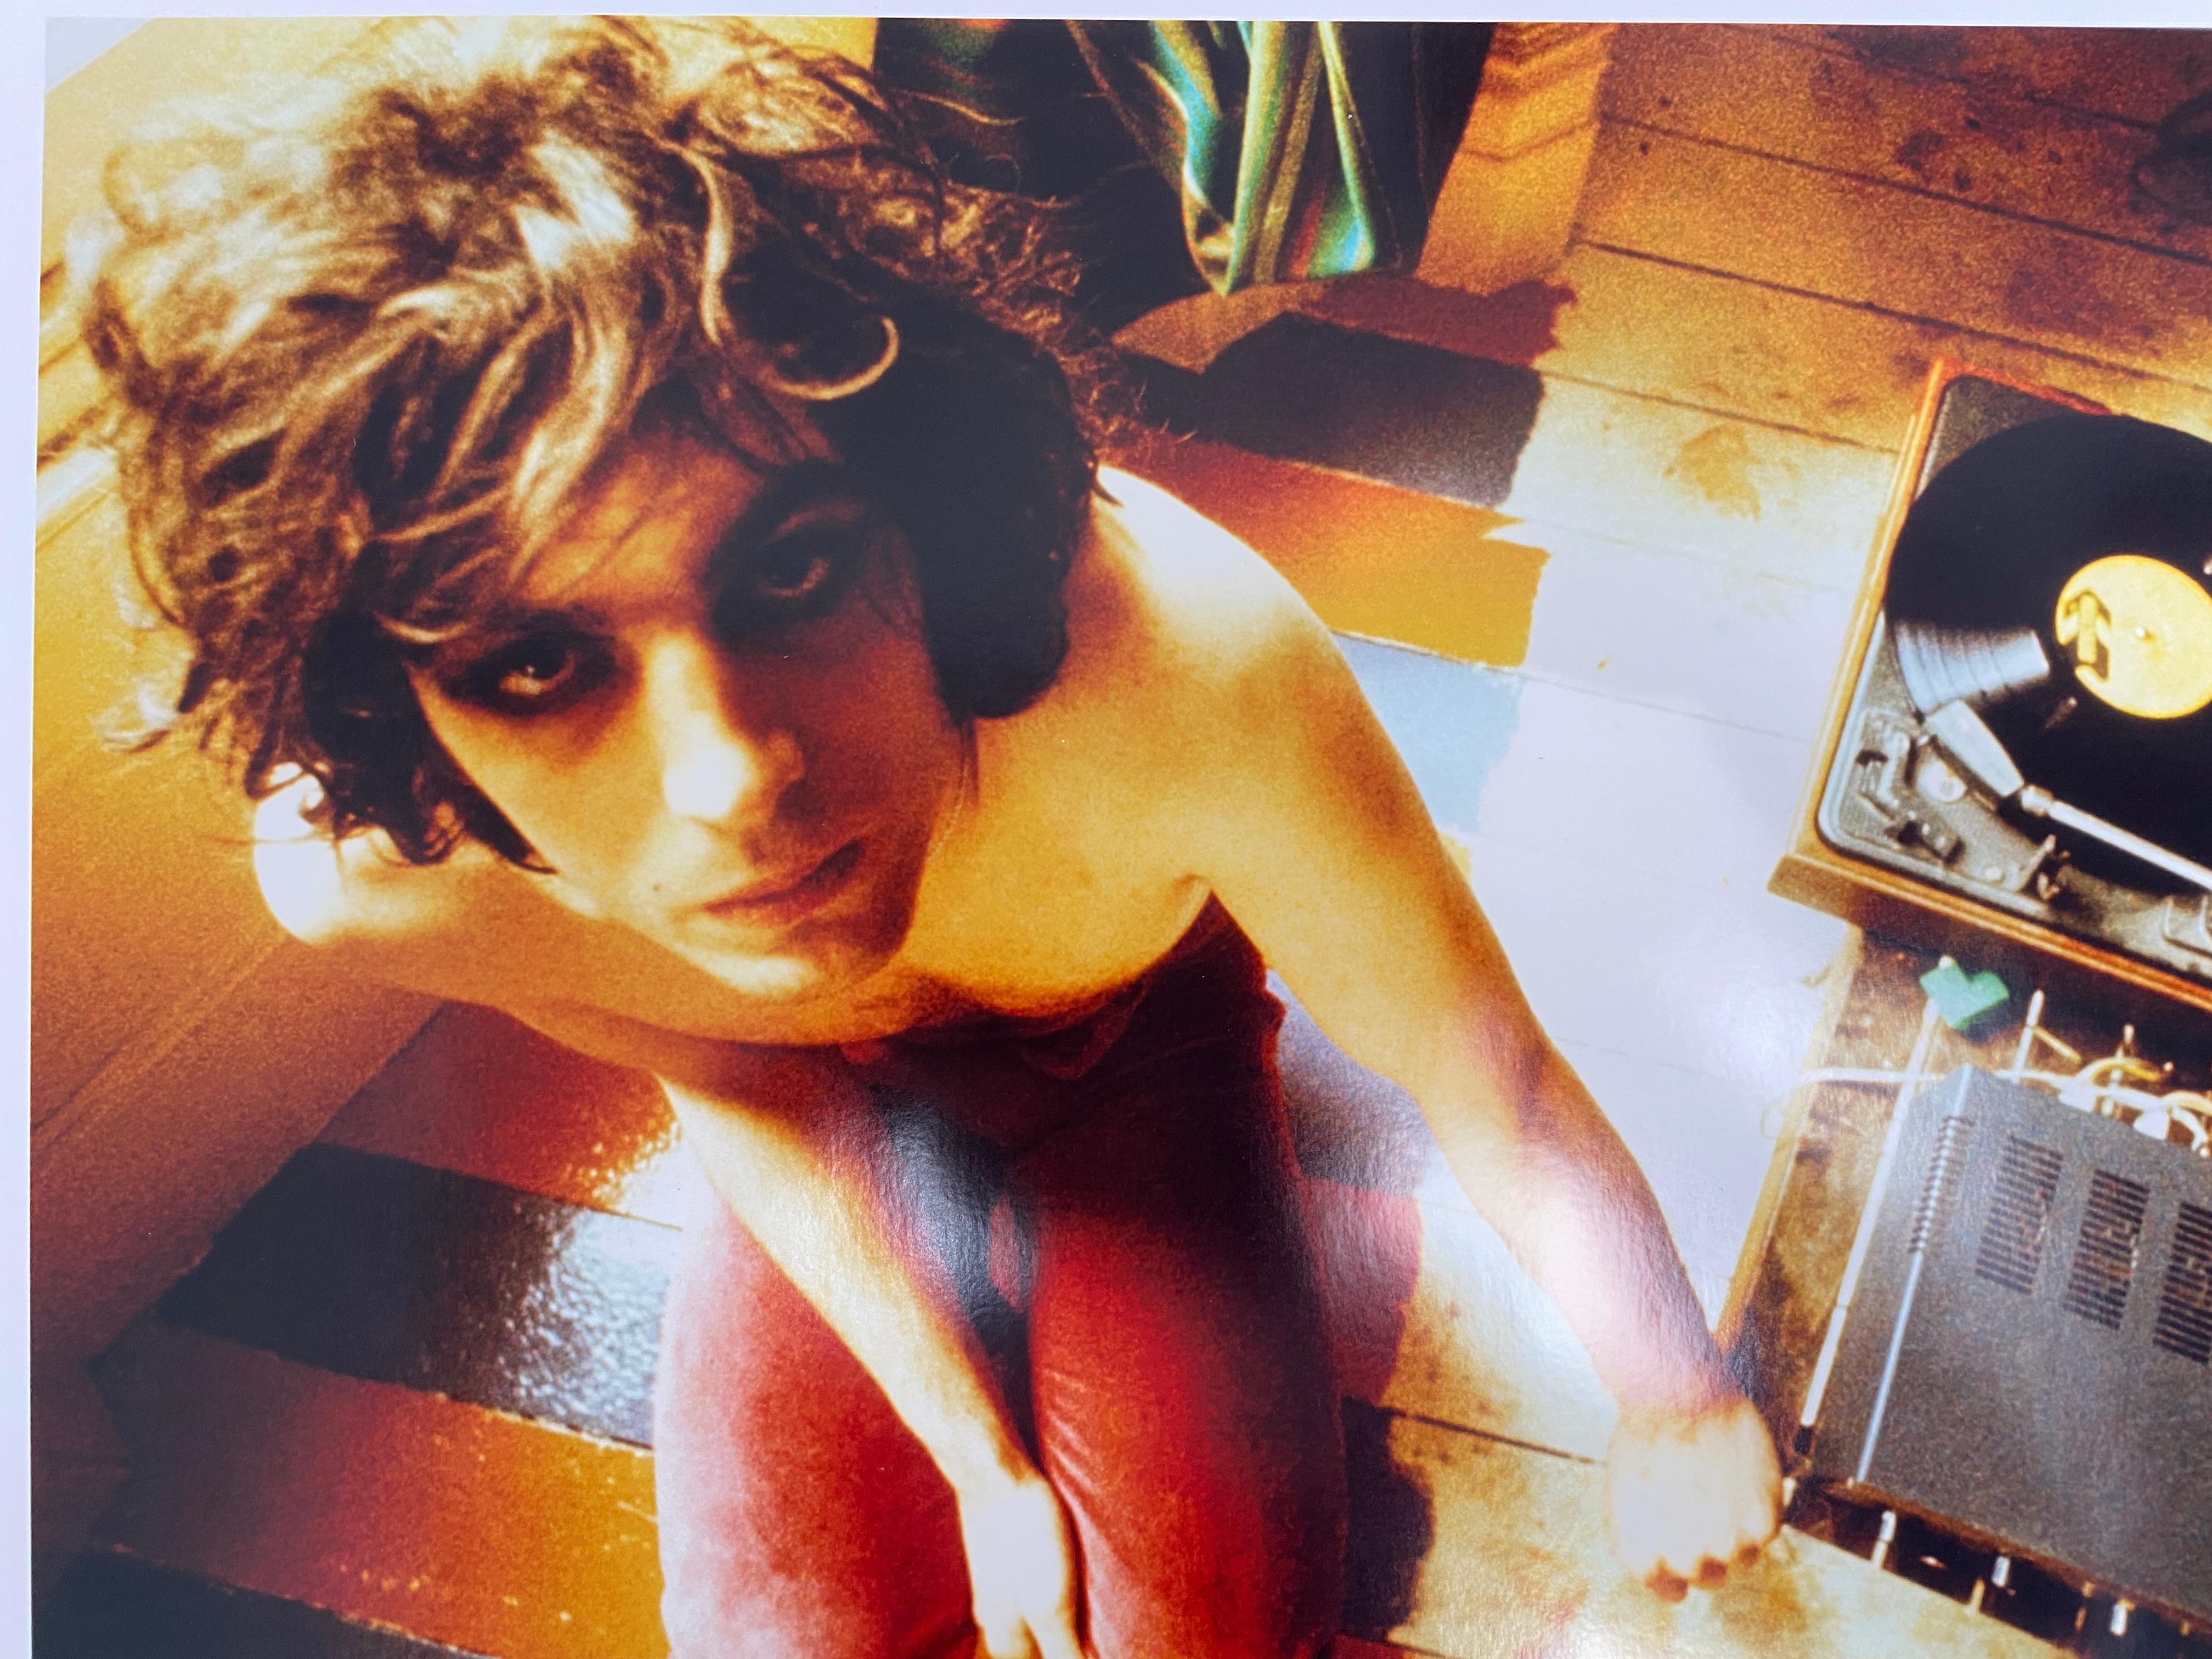 Mick Rock
Syd Barrett, 1969
Archivträchtiger Tintenstrahldruck
16 x 20 Zoll  (40,6 x 50,8 cm)
Ausgabe 24/90